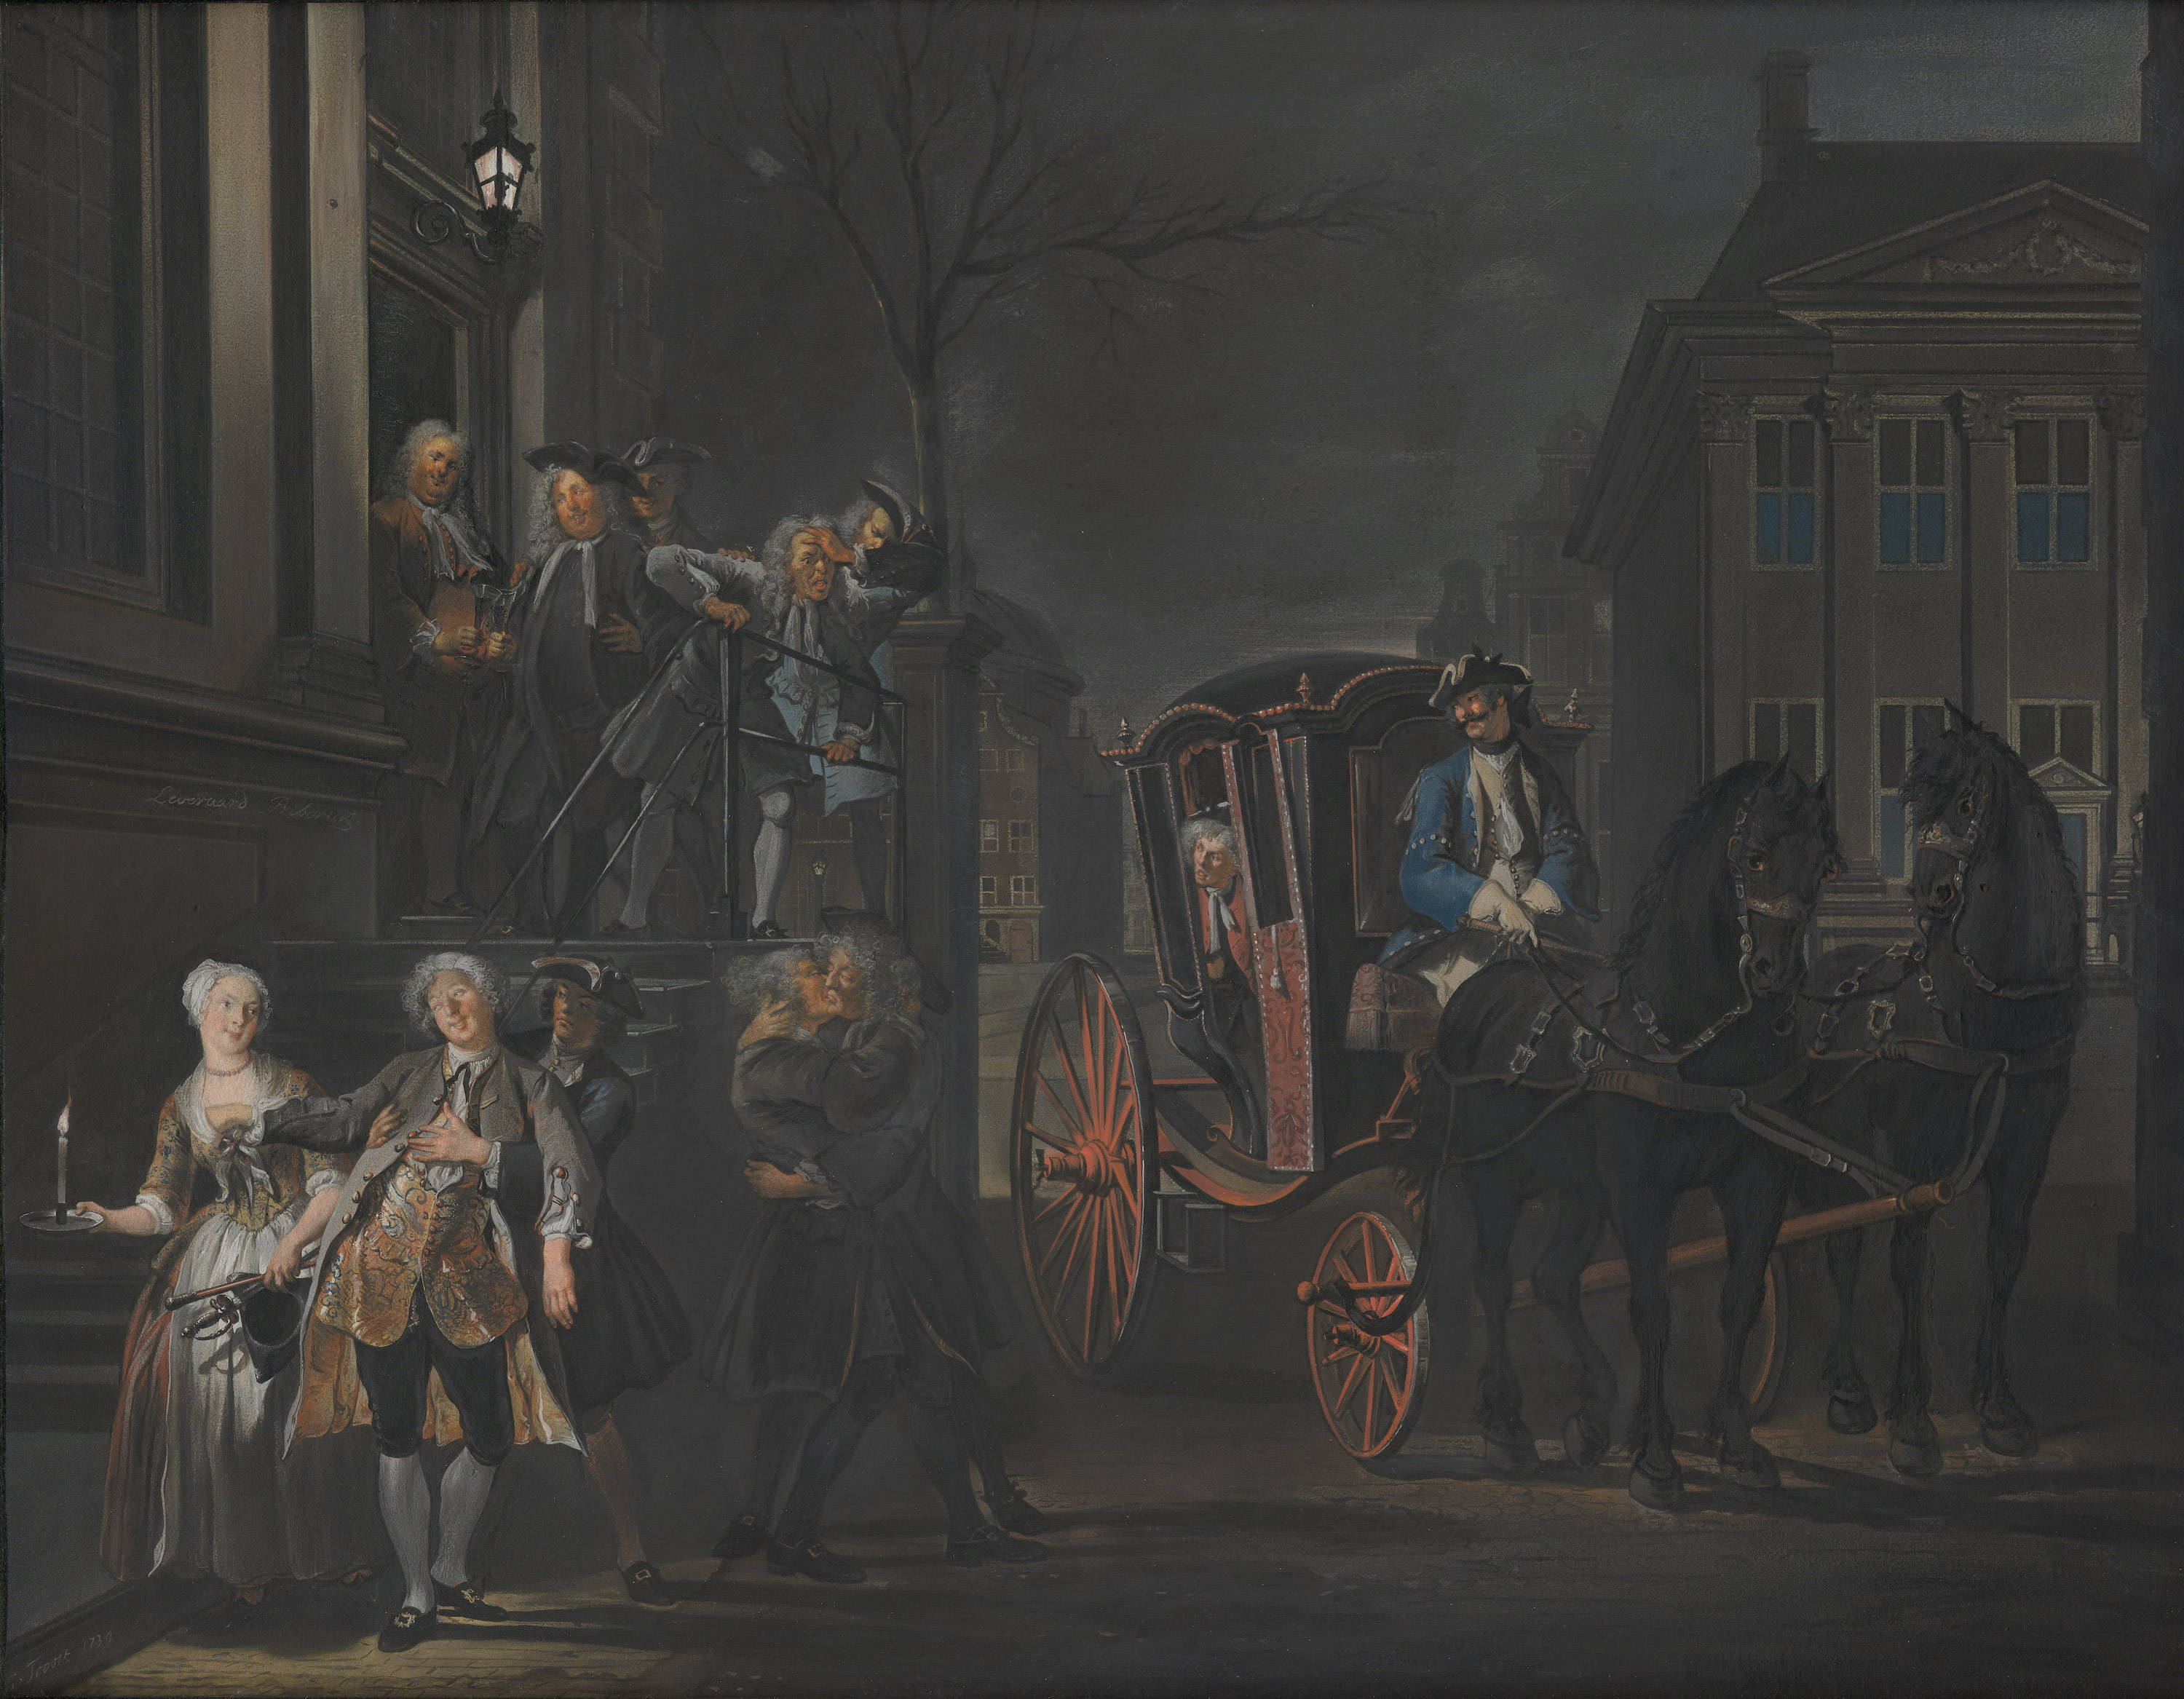 Yapabilenler, İlerledi; Yapamayanlar, Başarısız Oldu (orig. "Those Who Could, Walked; Those Who Could Not, Fell") by Cornelis Troost - 1739 - 57.7 x 74 cm 